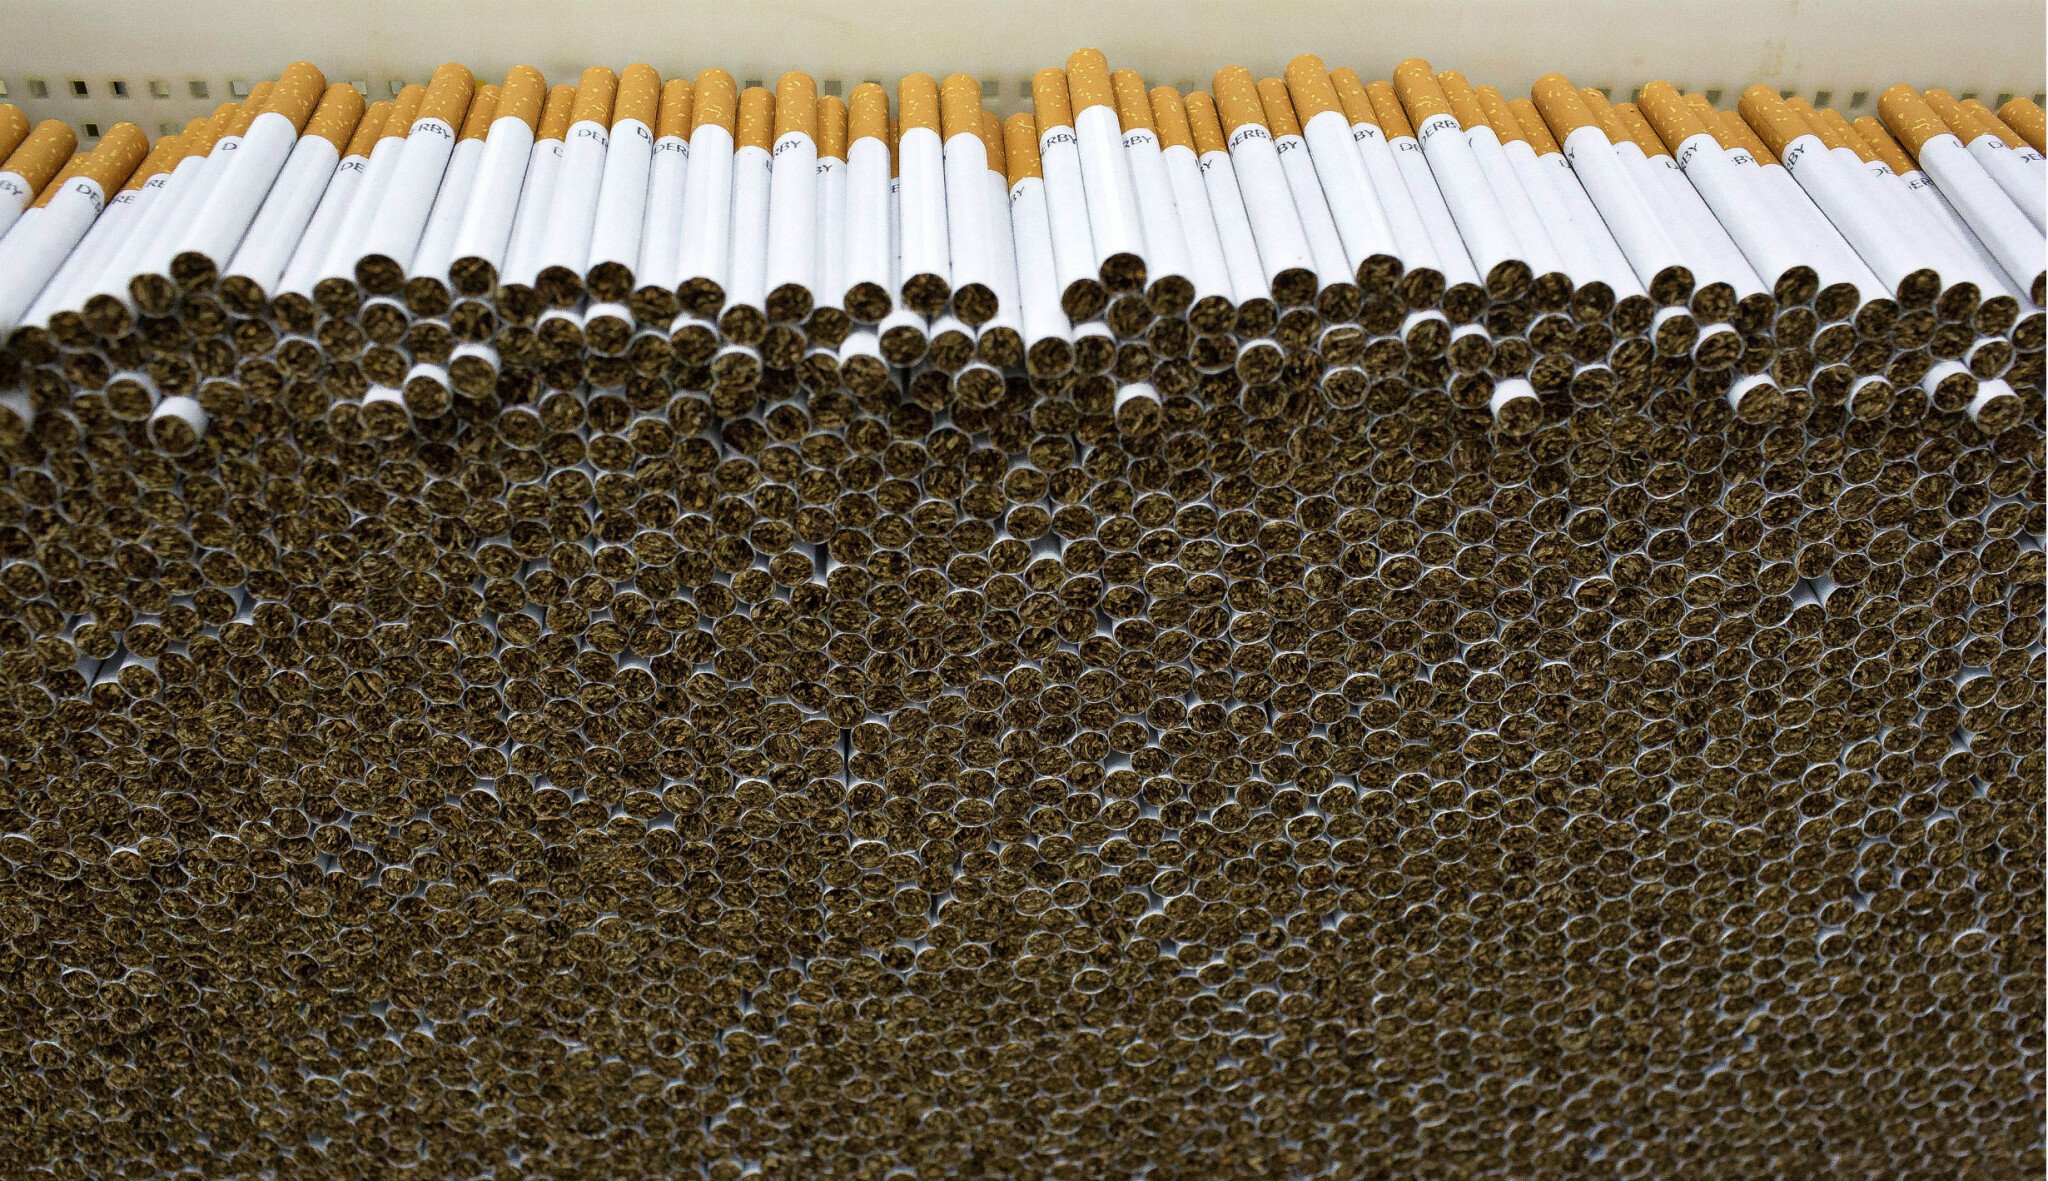 Konec klasických cigaret? V Británii chce Philip Morris ukončit jejich prodej do deseti let